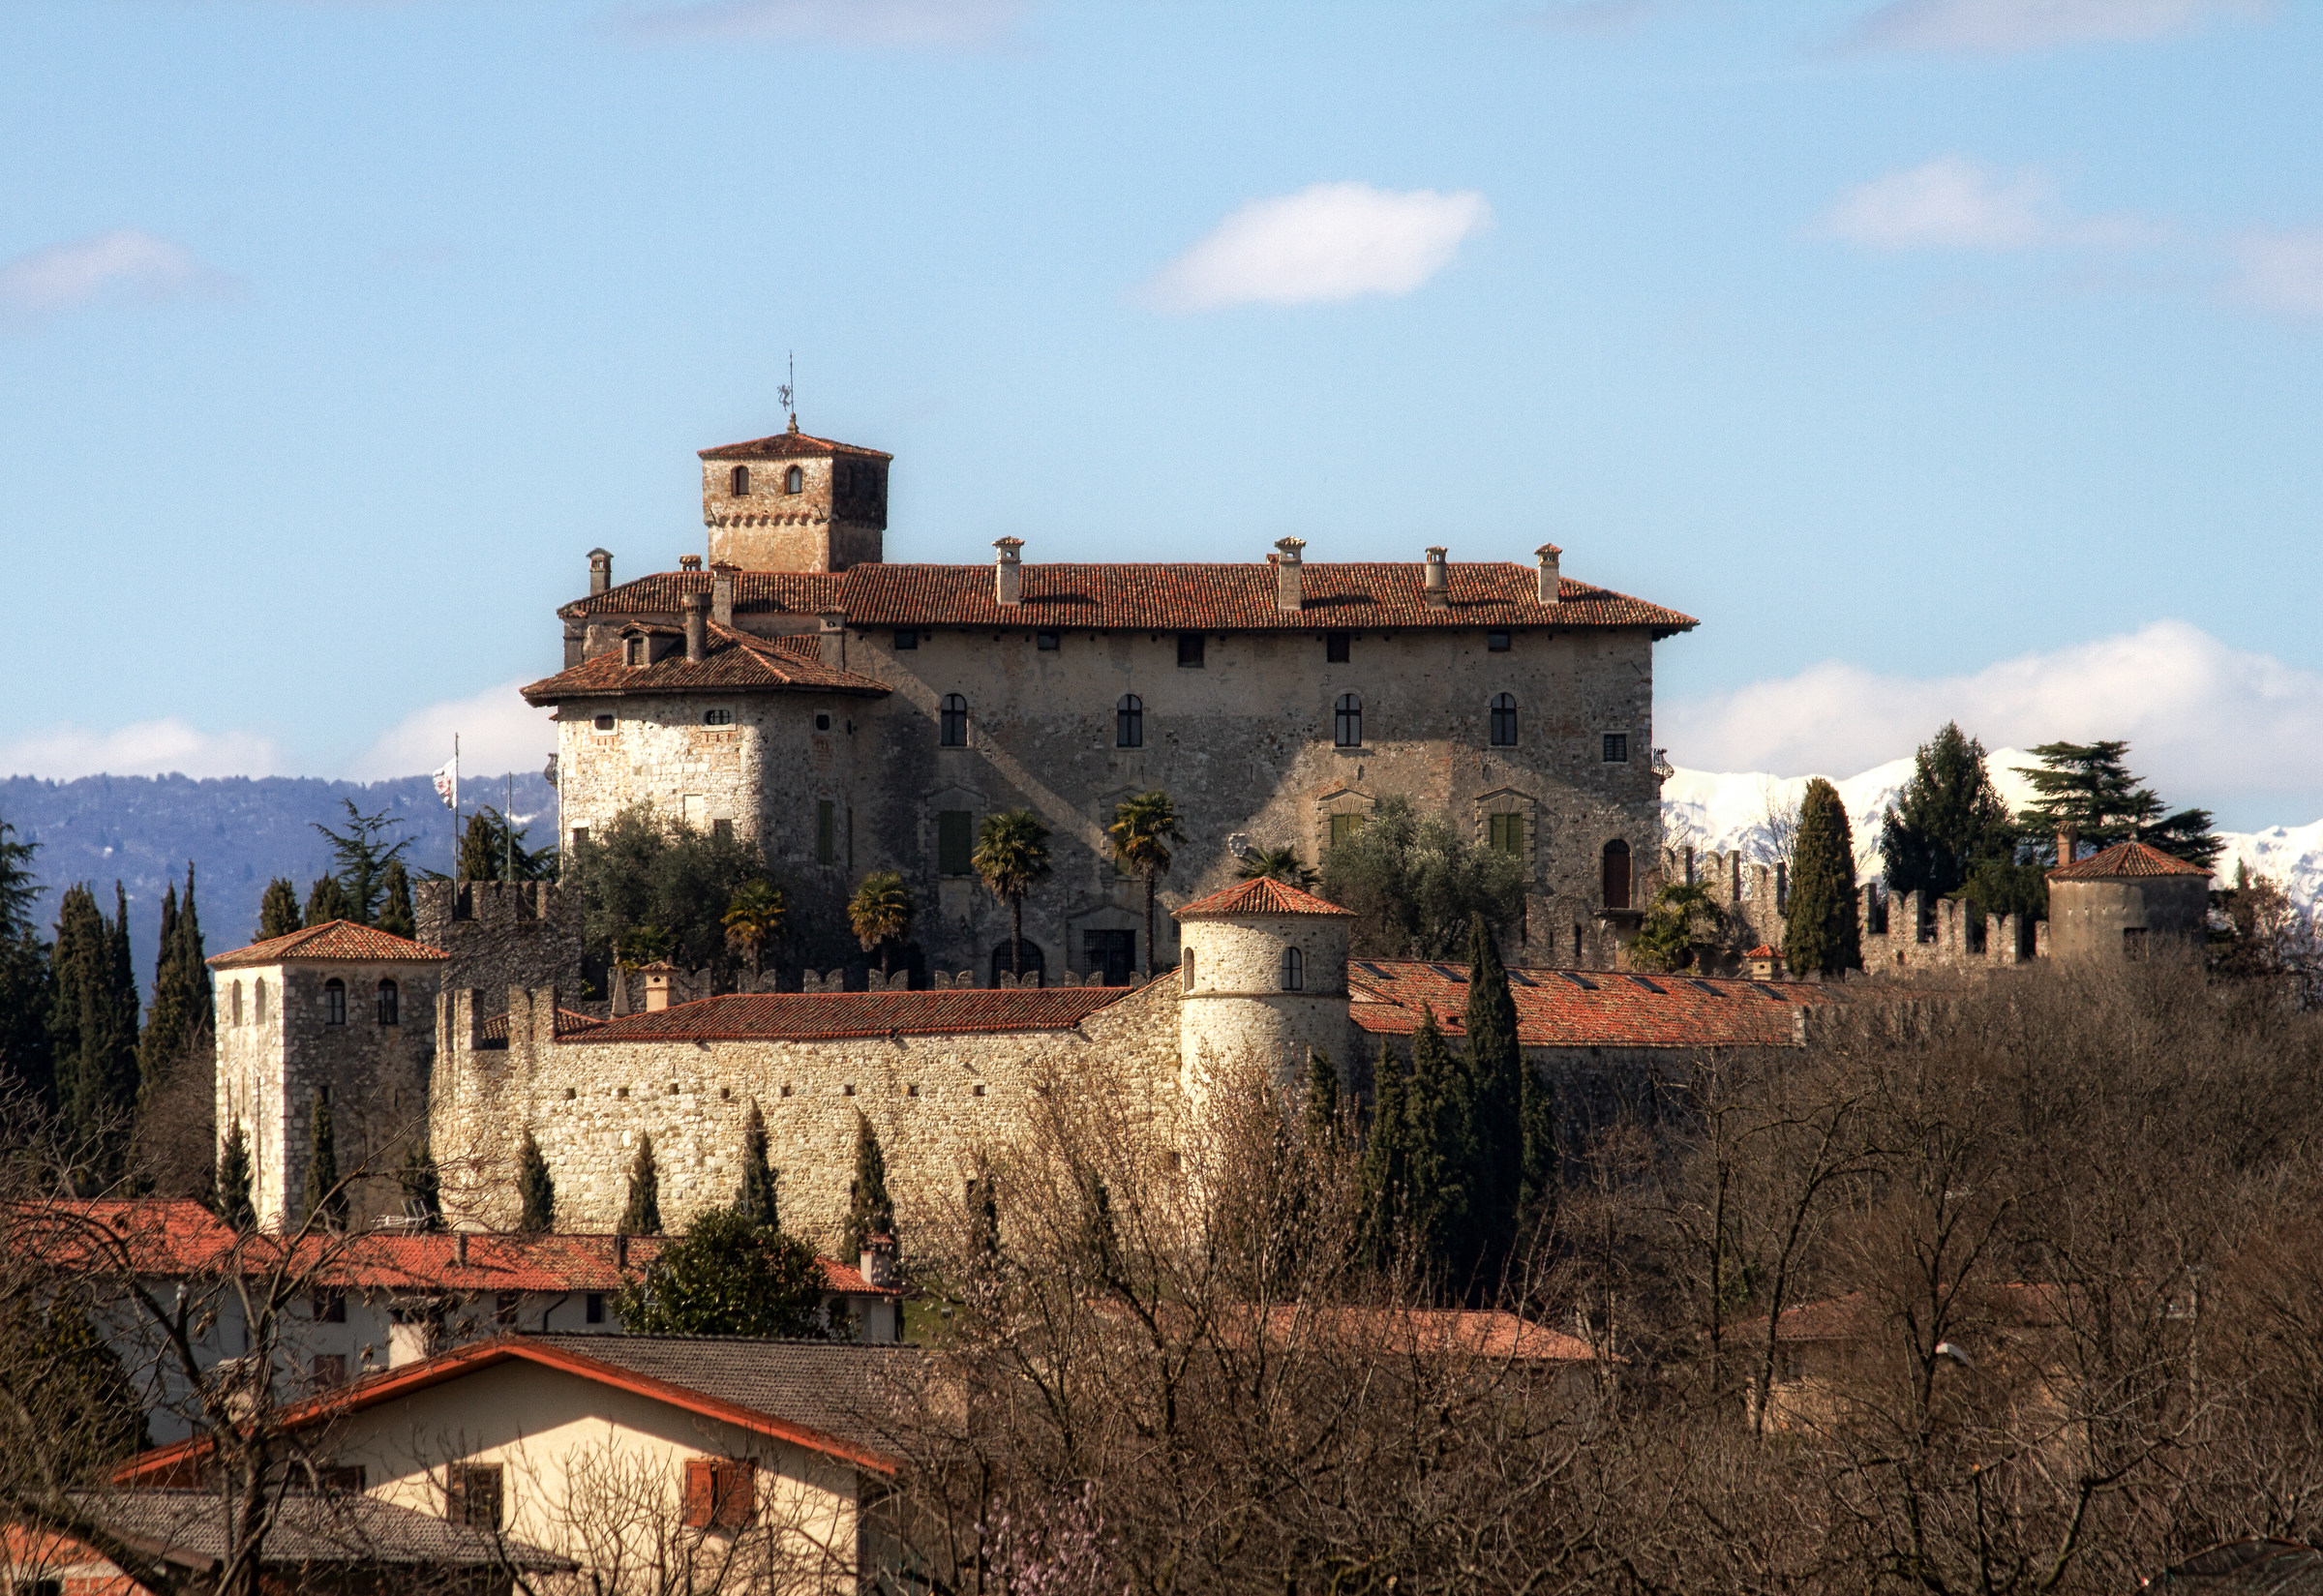 The castle of Villalta...